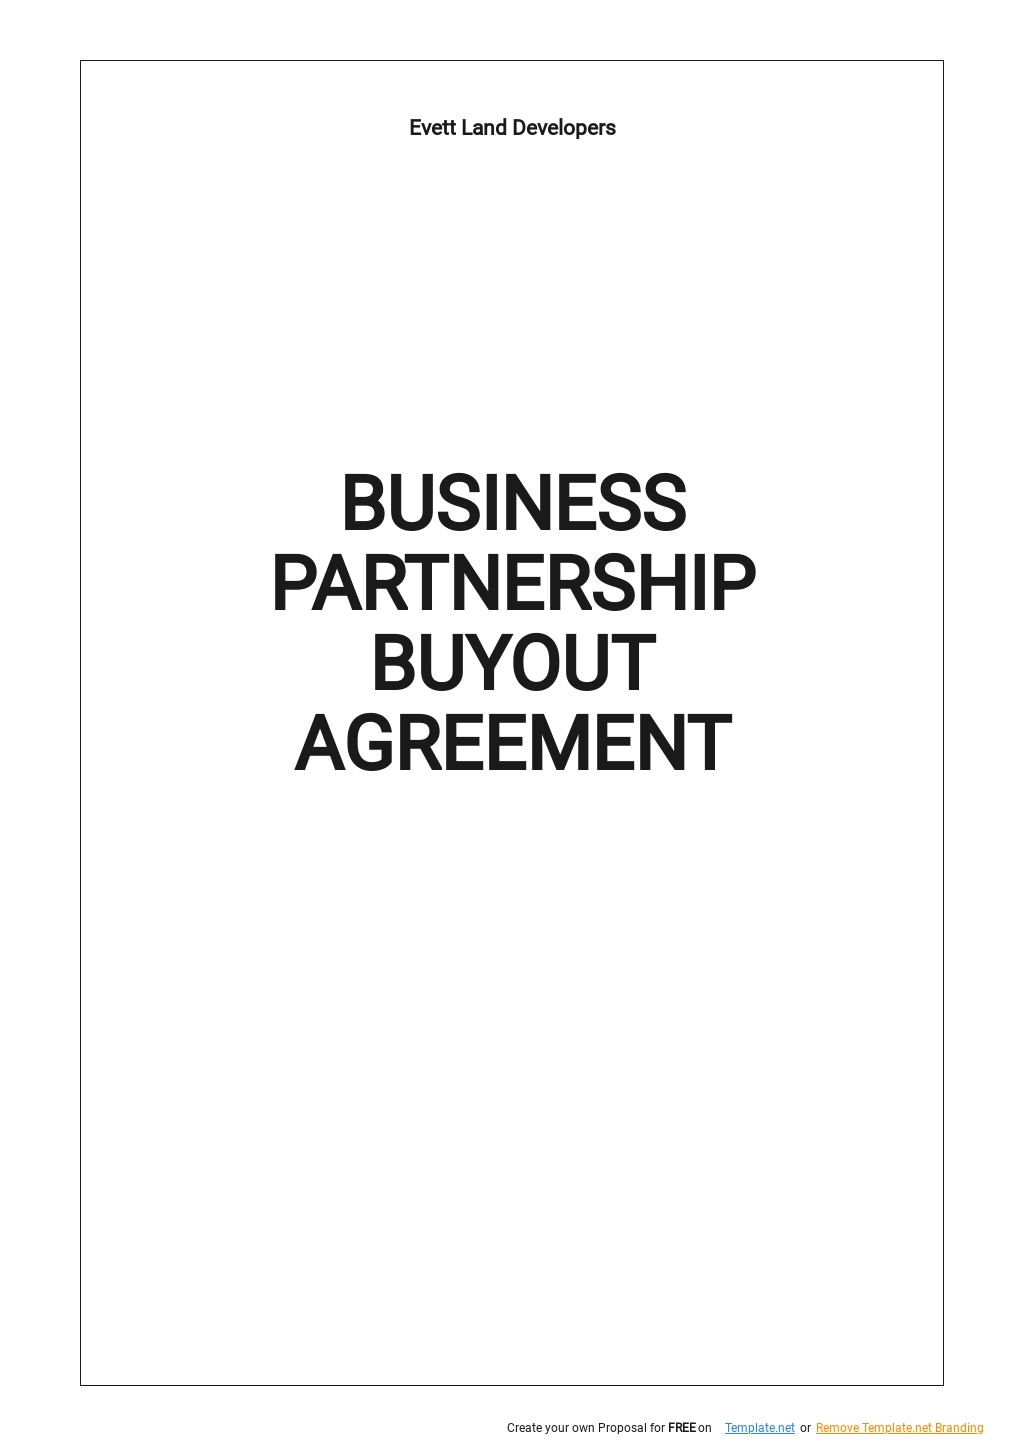 Business Partnership Buyout Agreement Template.jpe